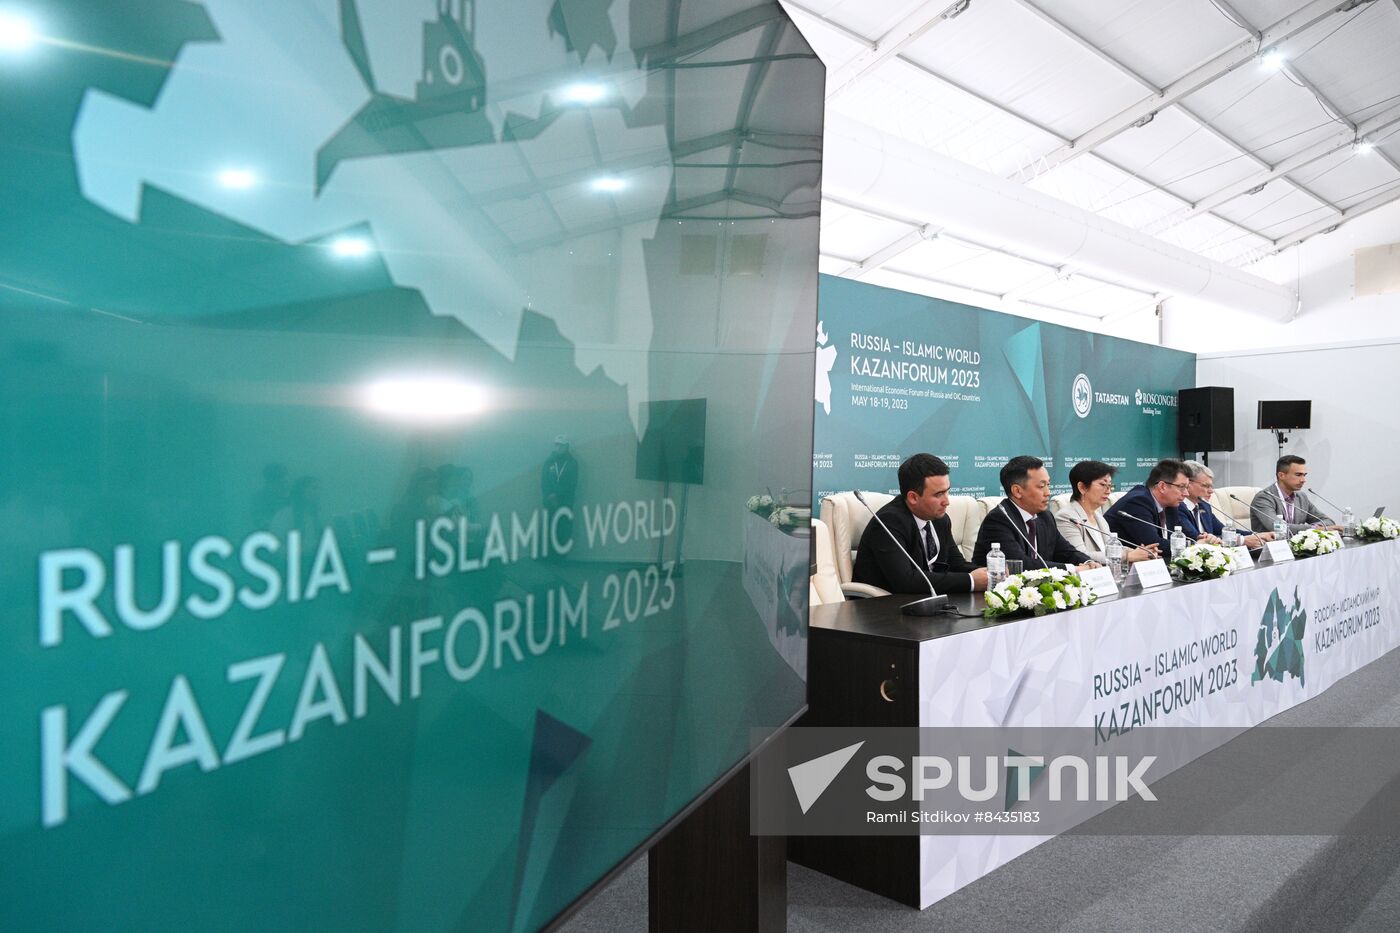 KAZANFORUM 2023. Press conference on international cooperation of Russian universities with Kazakhstan and Uzbekistan